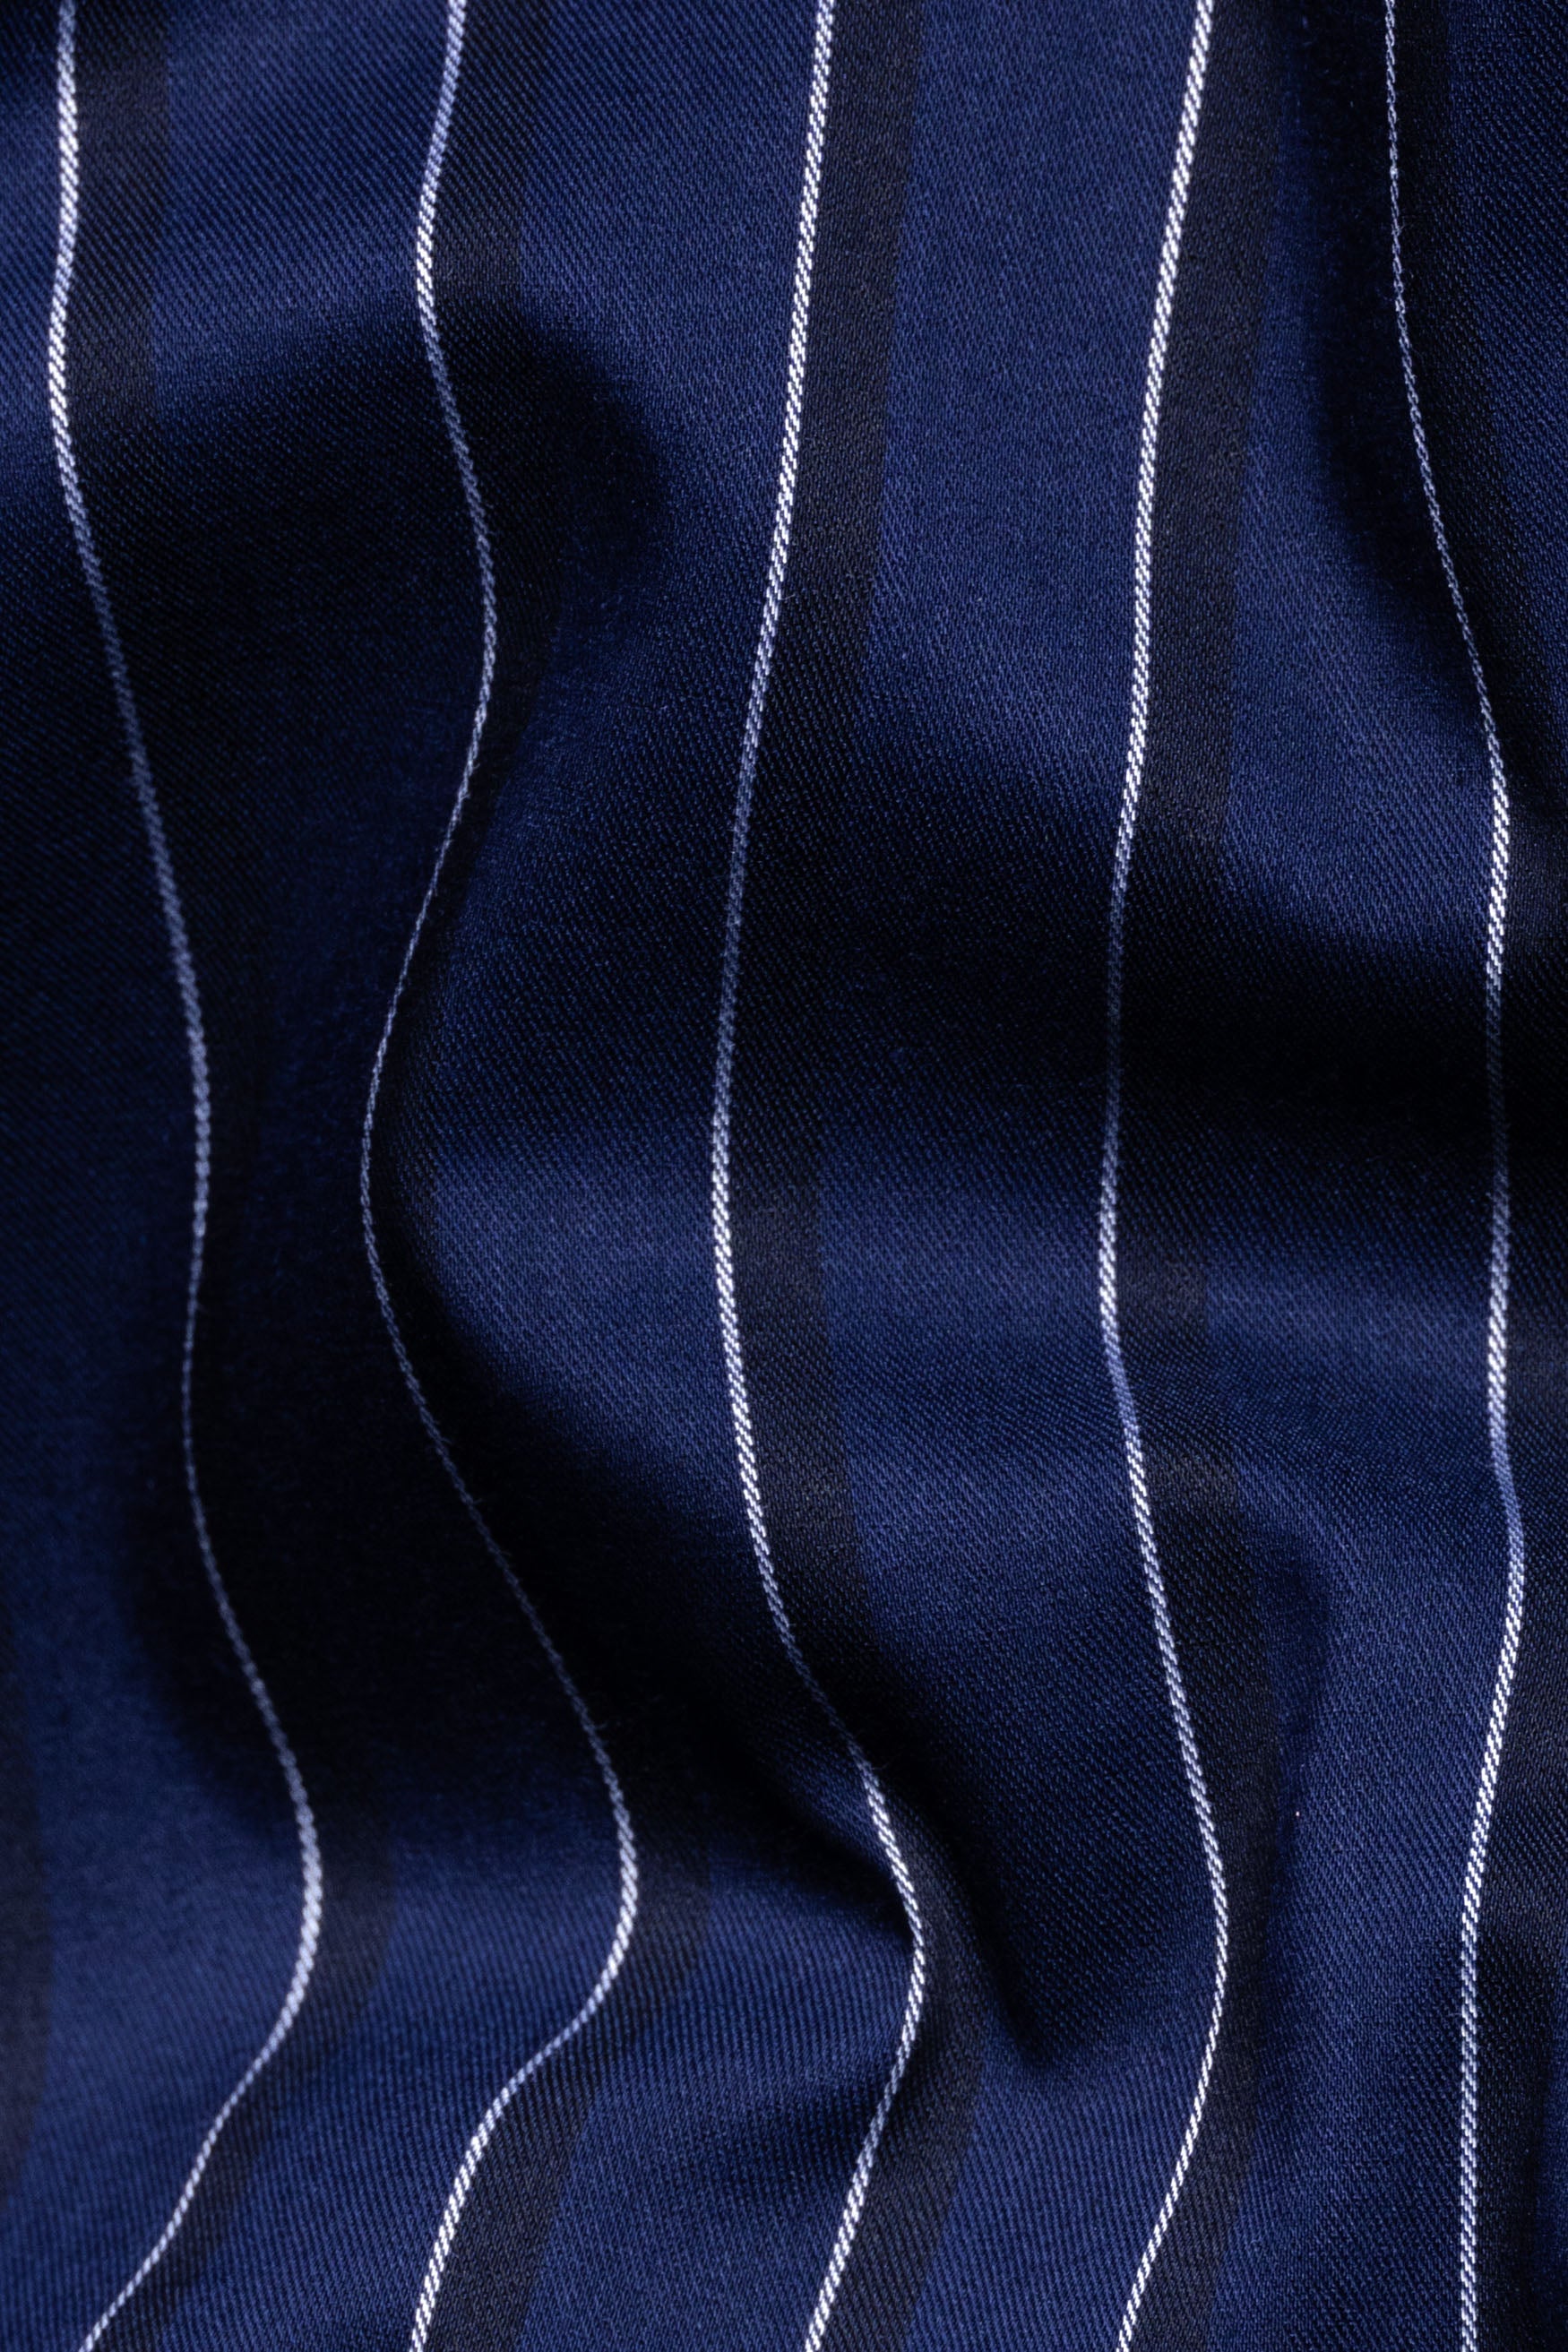 Tangaroa Blue Striped Twill Premium Cotton Shorts SR402-28, SR402-30, SR402-32, SR402-34, SR402-36, SR402-38, SR402-40, SR402-42, SR402-44